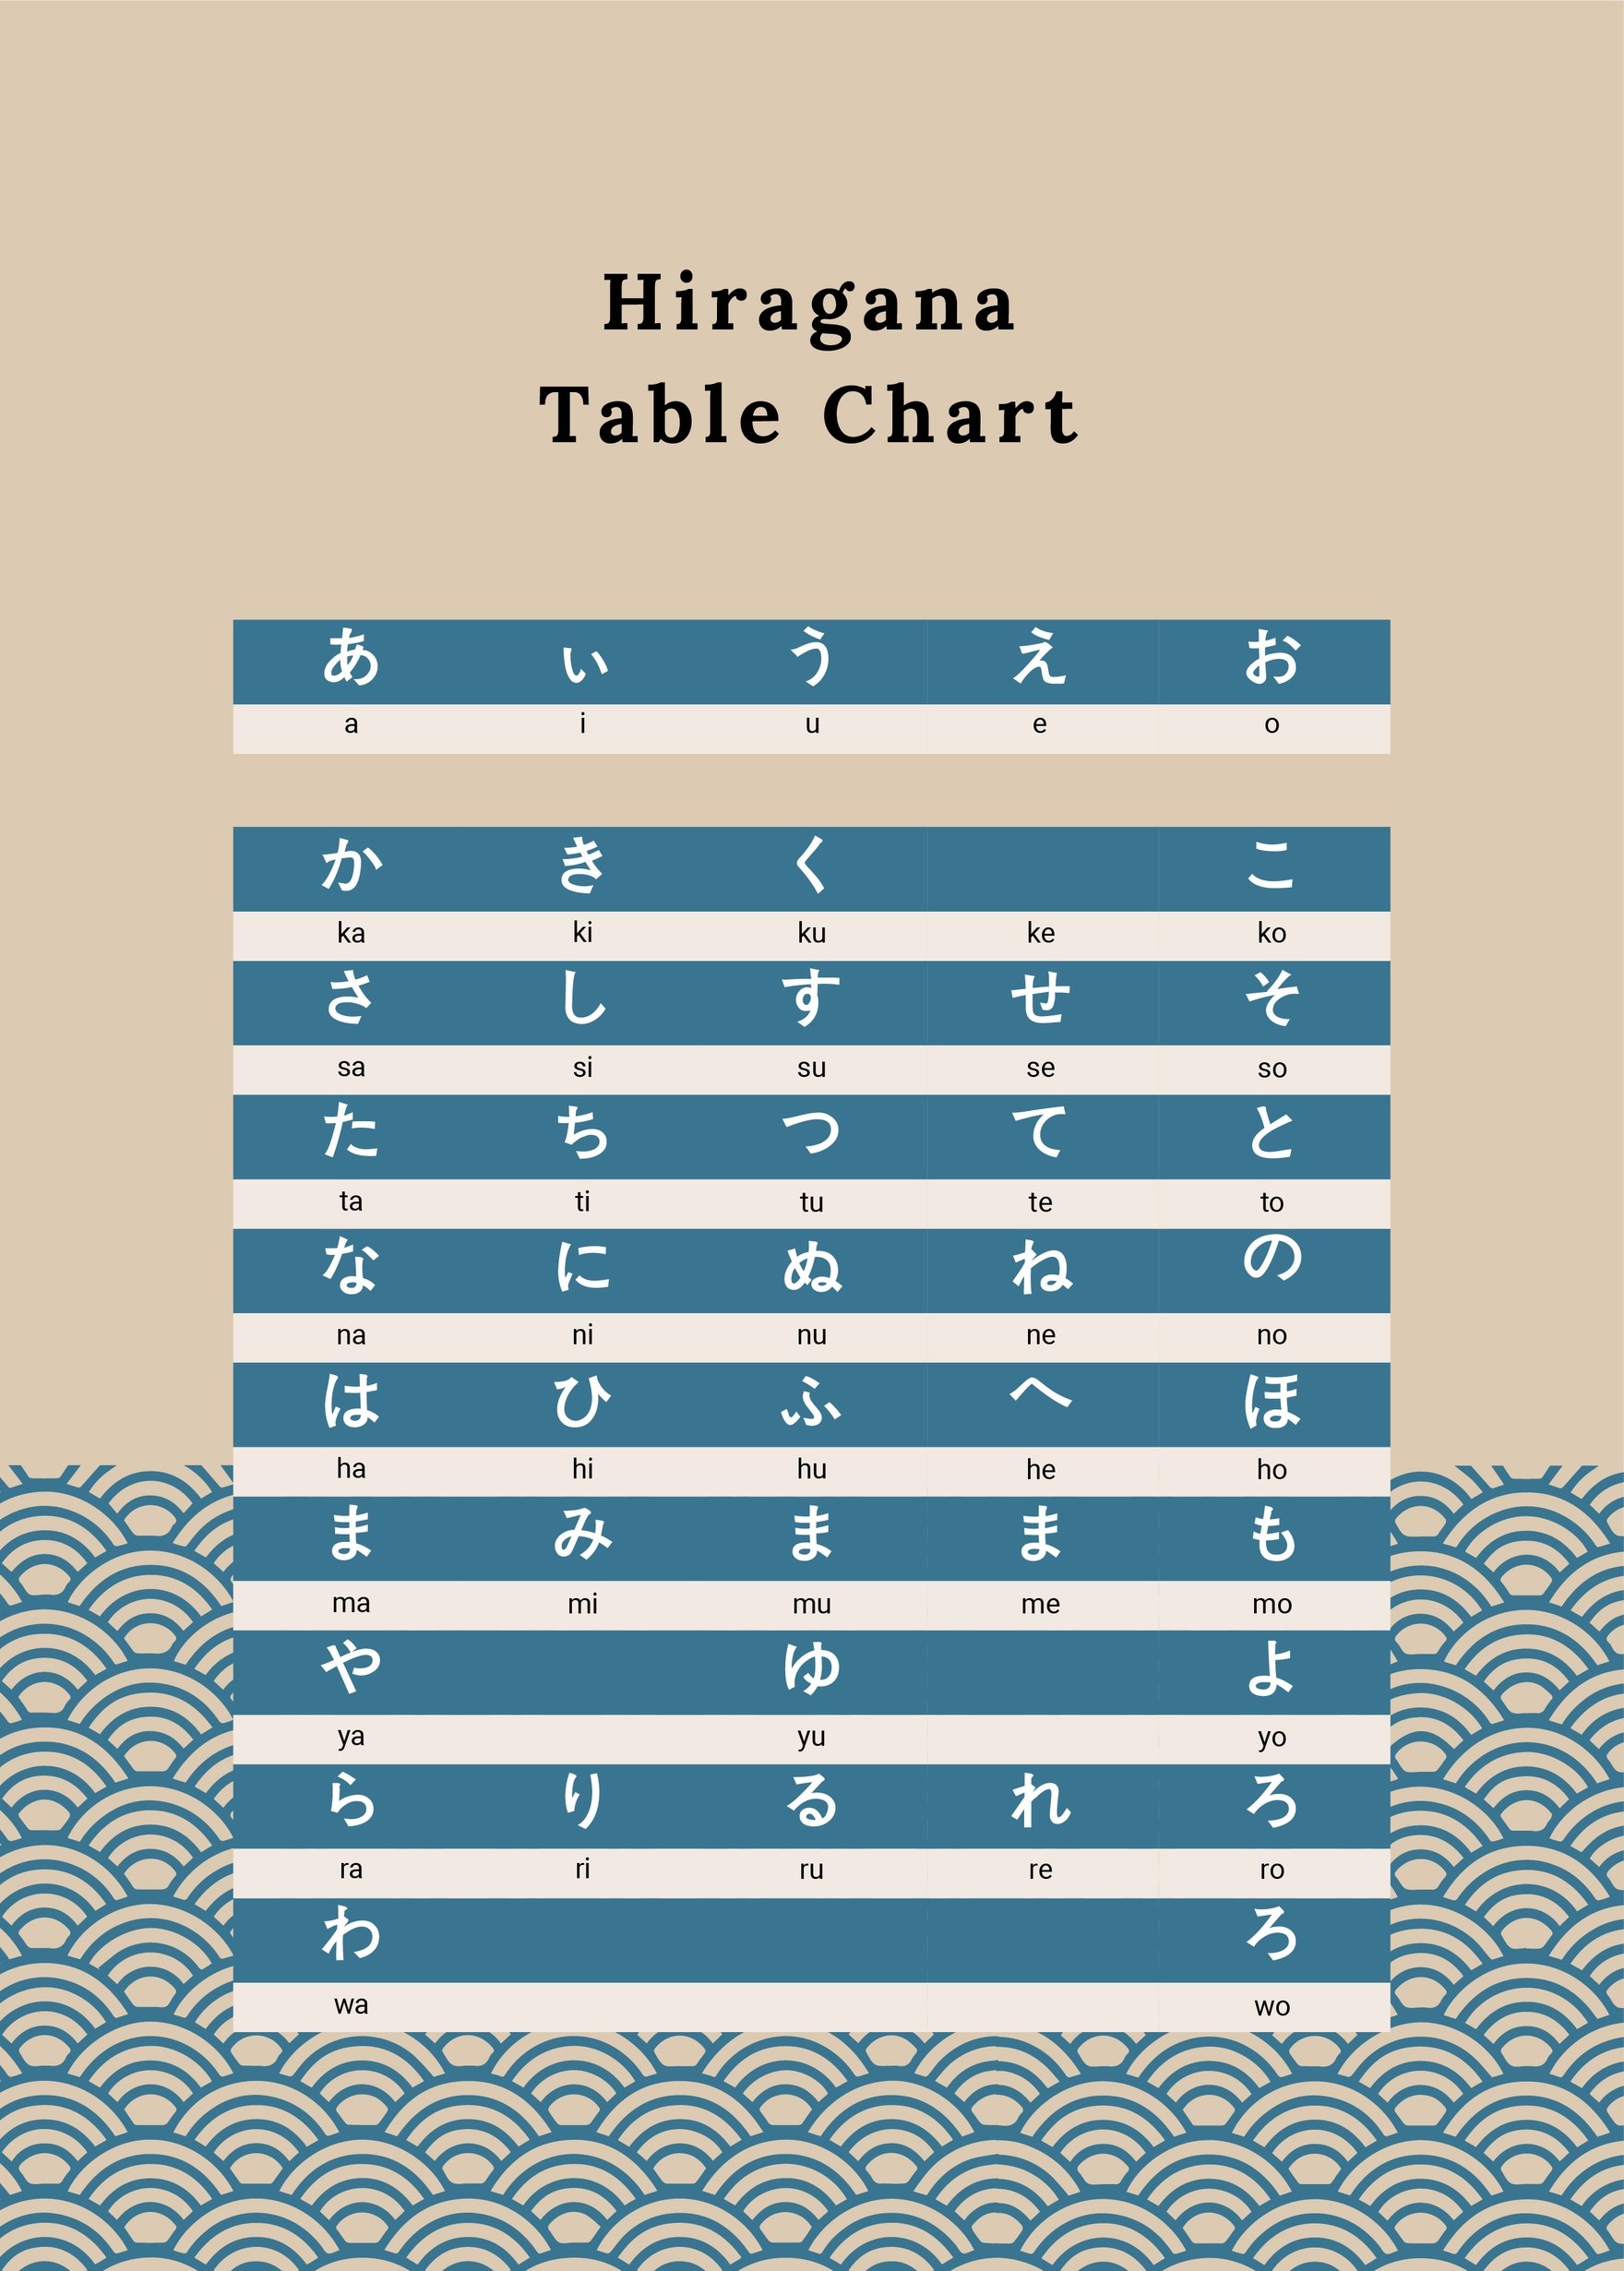 Hiragana Table Chart in PDF, Illustrator